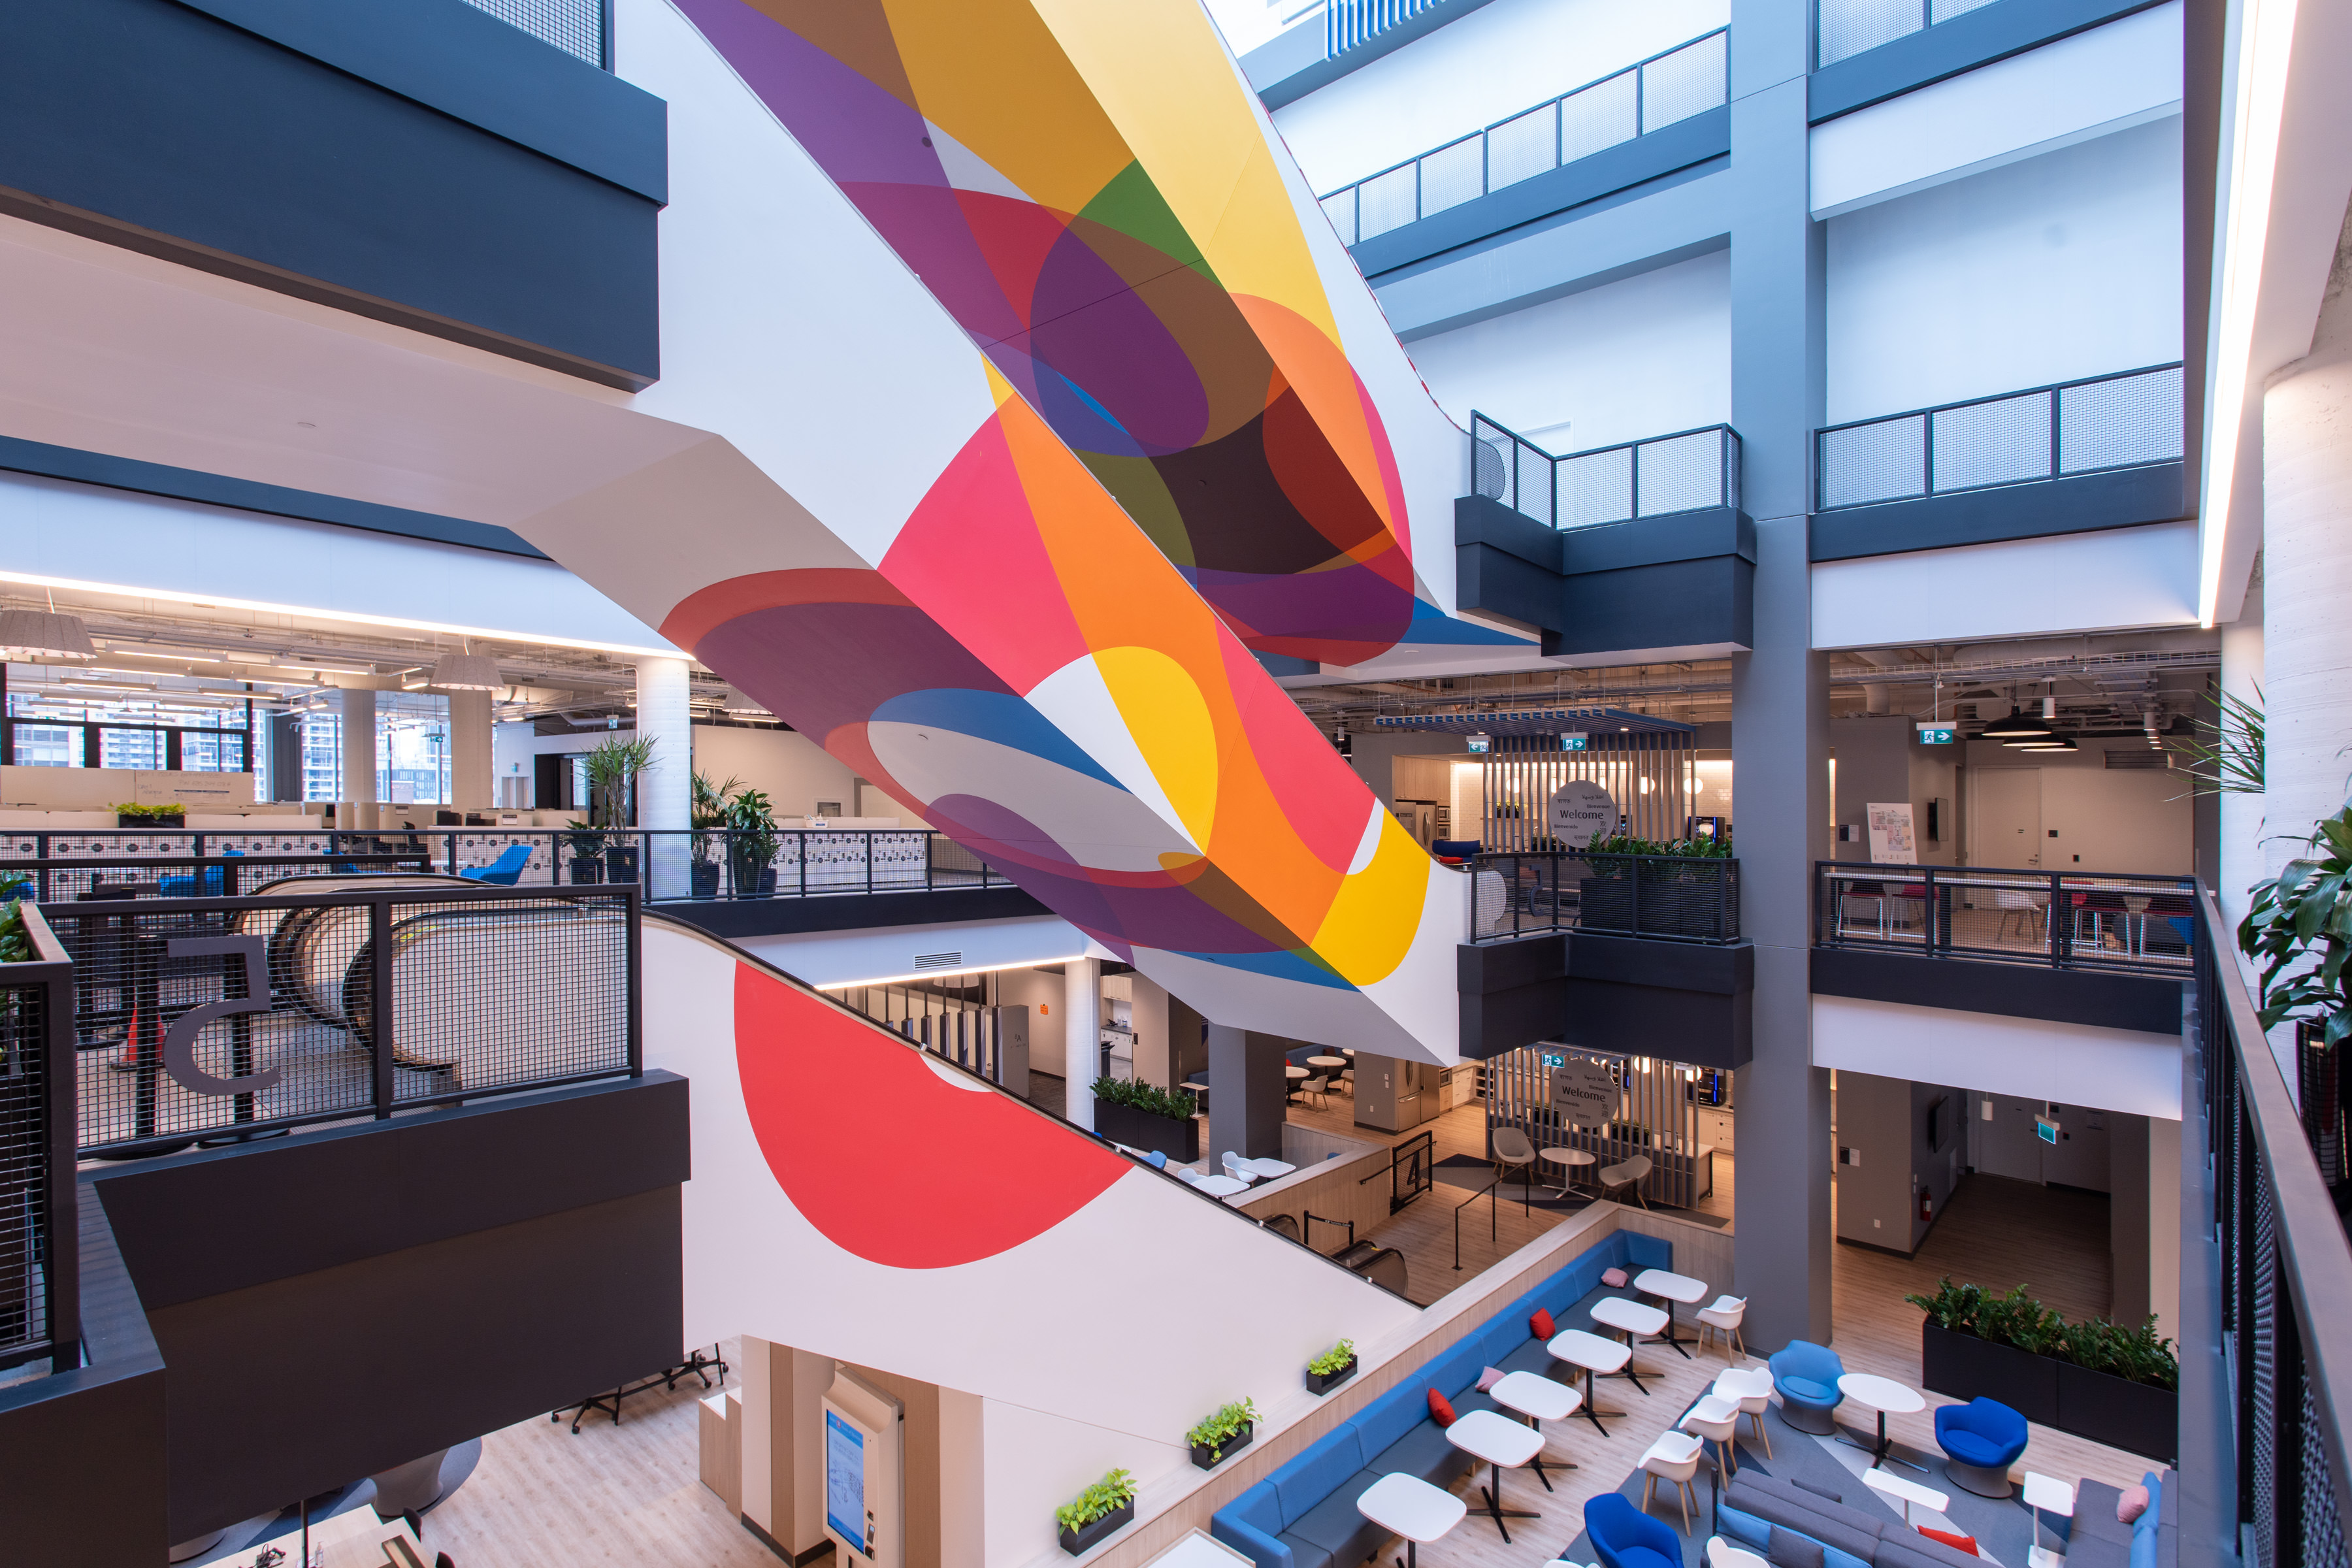 BMO Place transforms iconic retail space at Toronto Eaton Centre